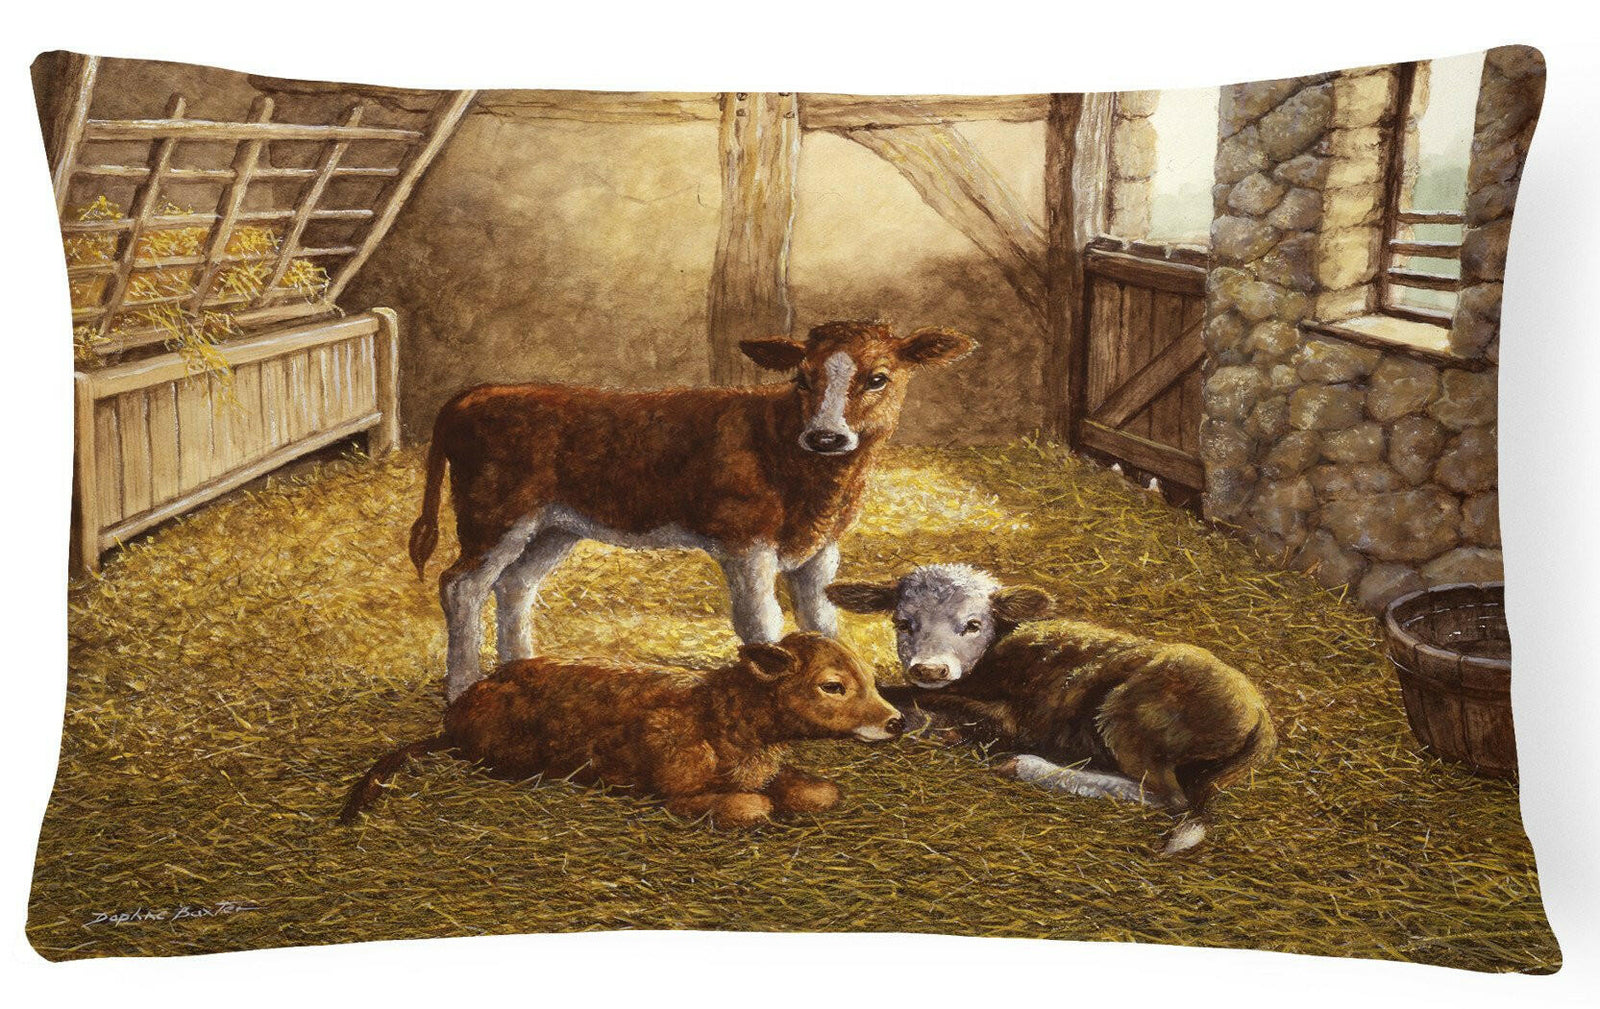 Cows Calves in the Barn Fabric Decorative Pillow BDBA0179PW1216 by Caroline's Treasures